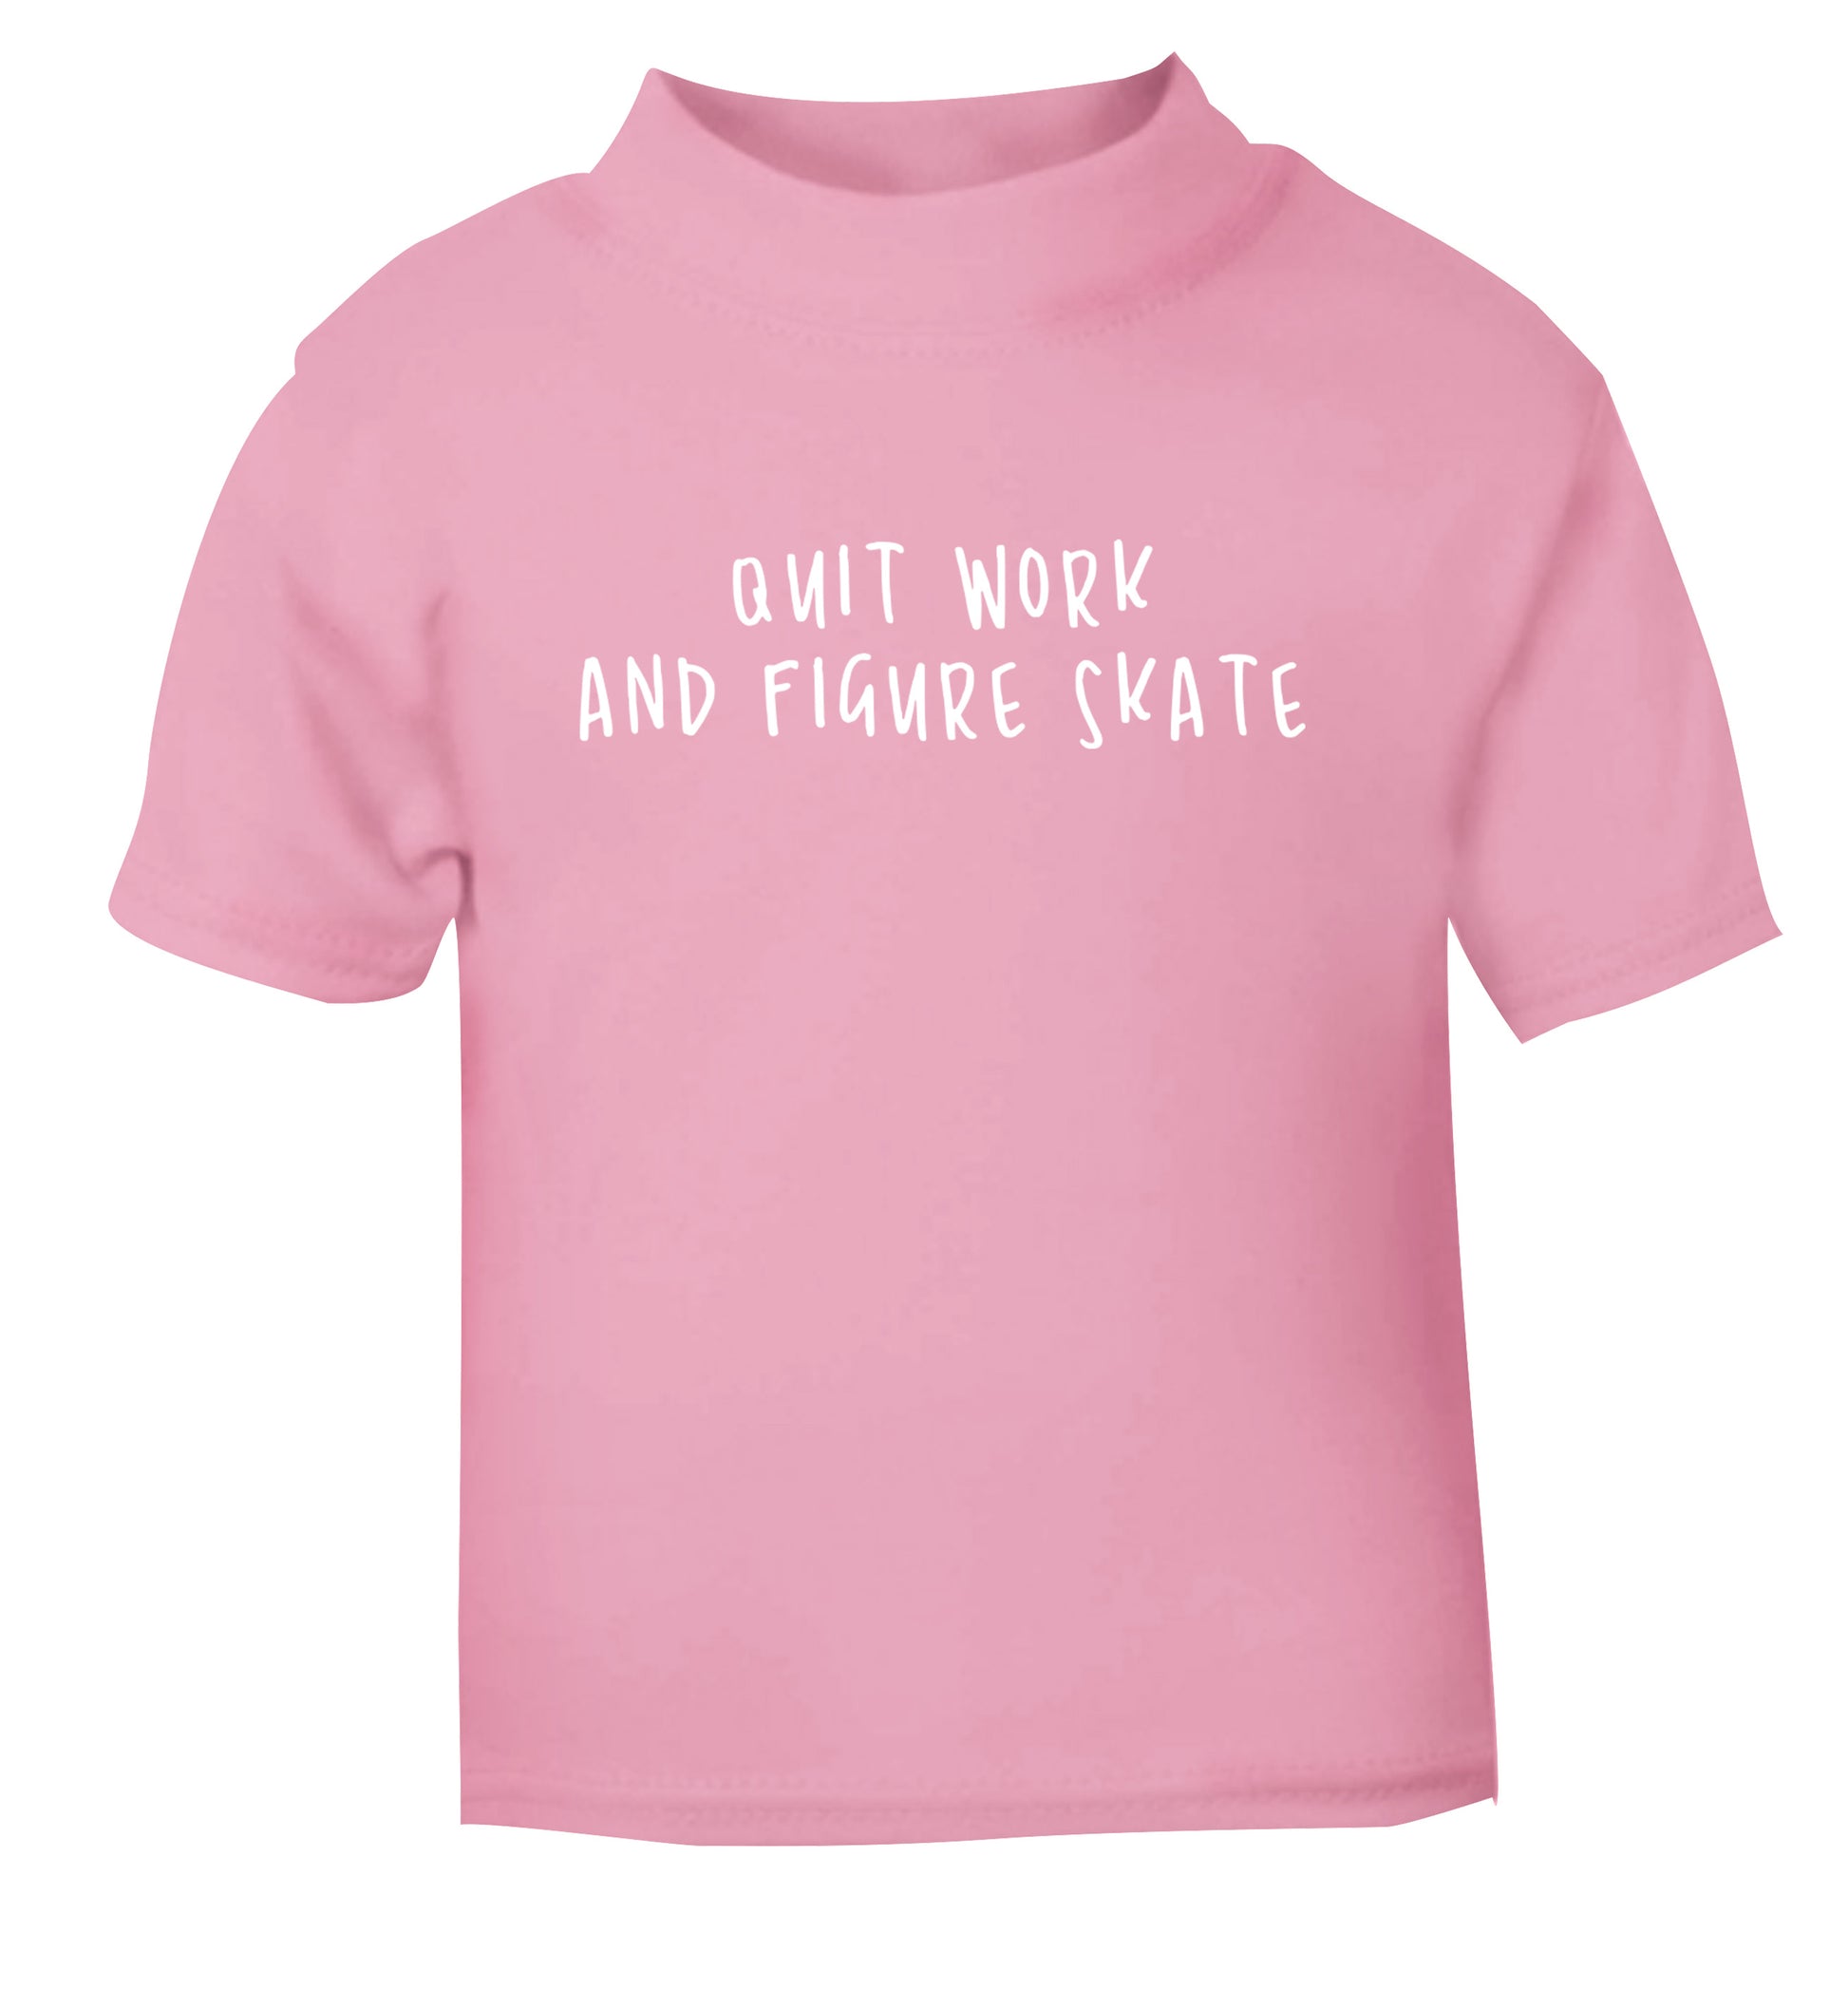 Quit work figure skate light pink Baby Toddler Tshirt 2 Years